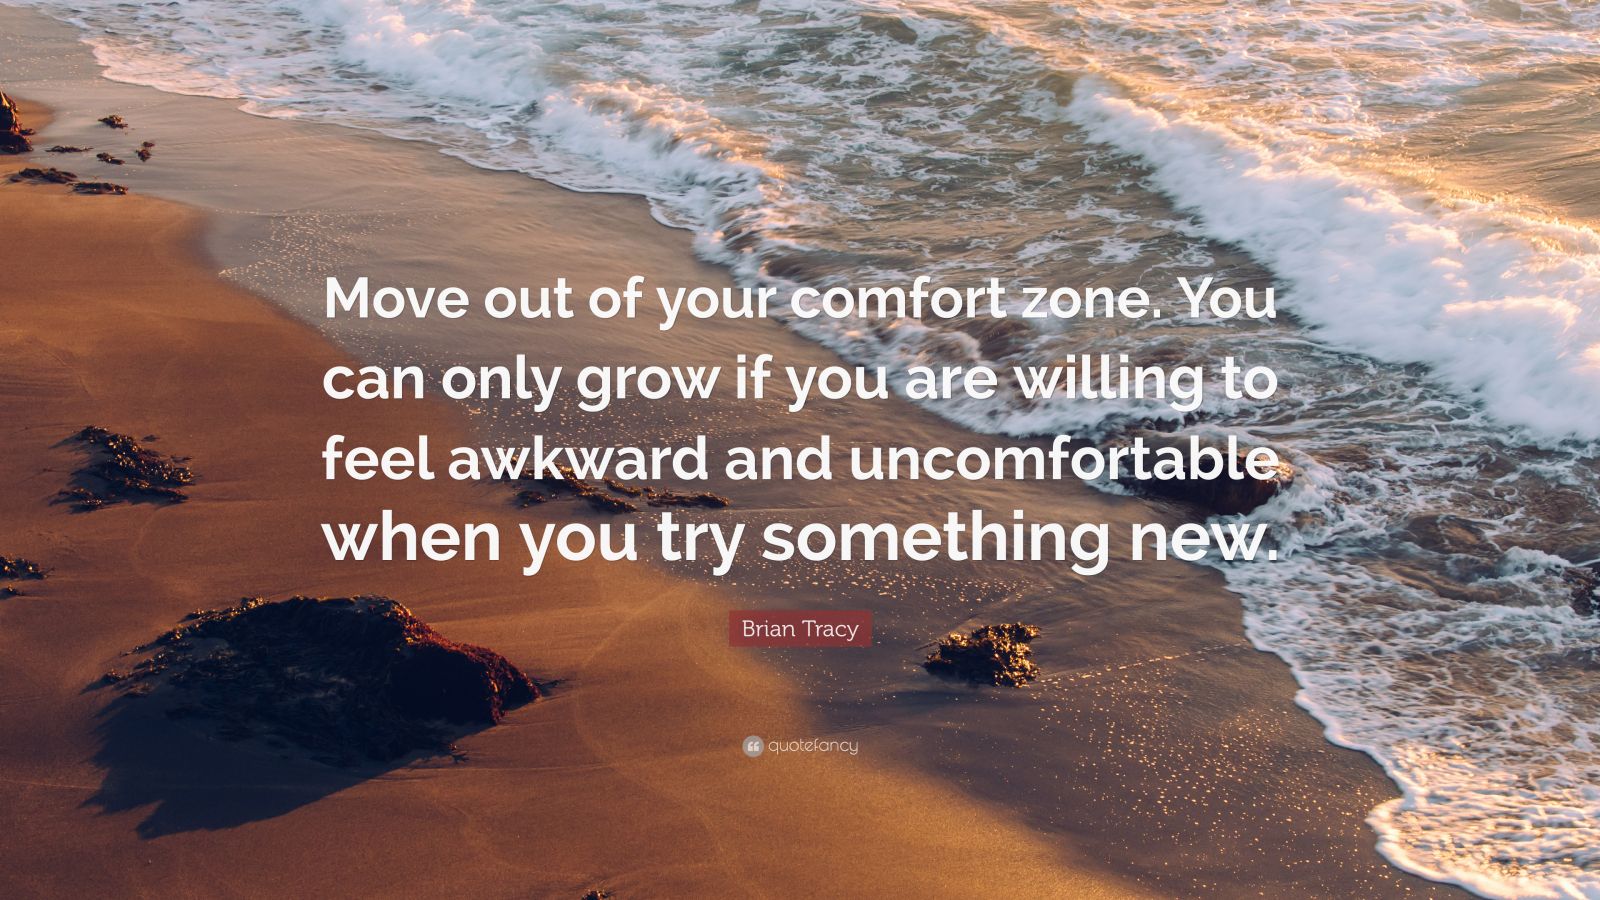 a speech about comfort zone